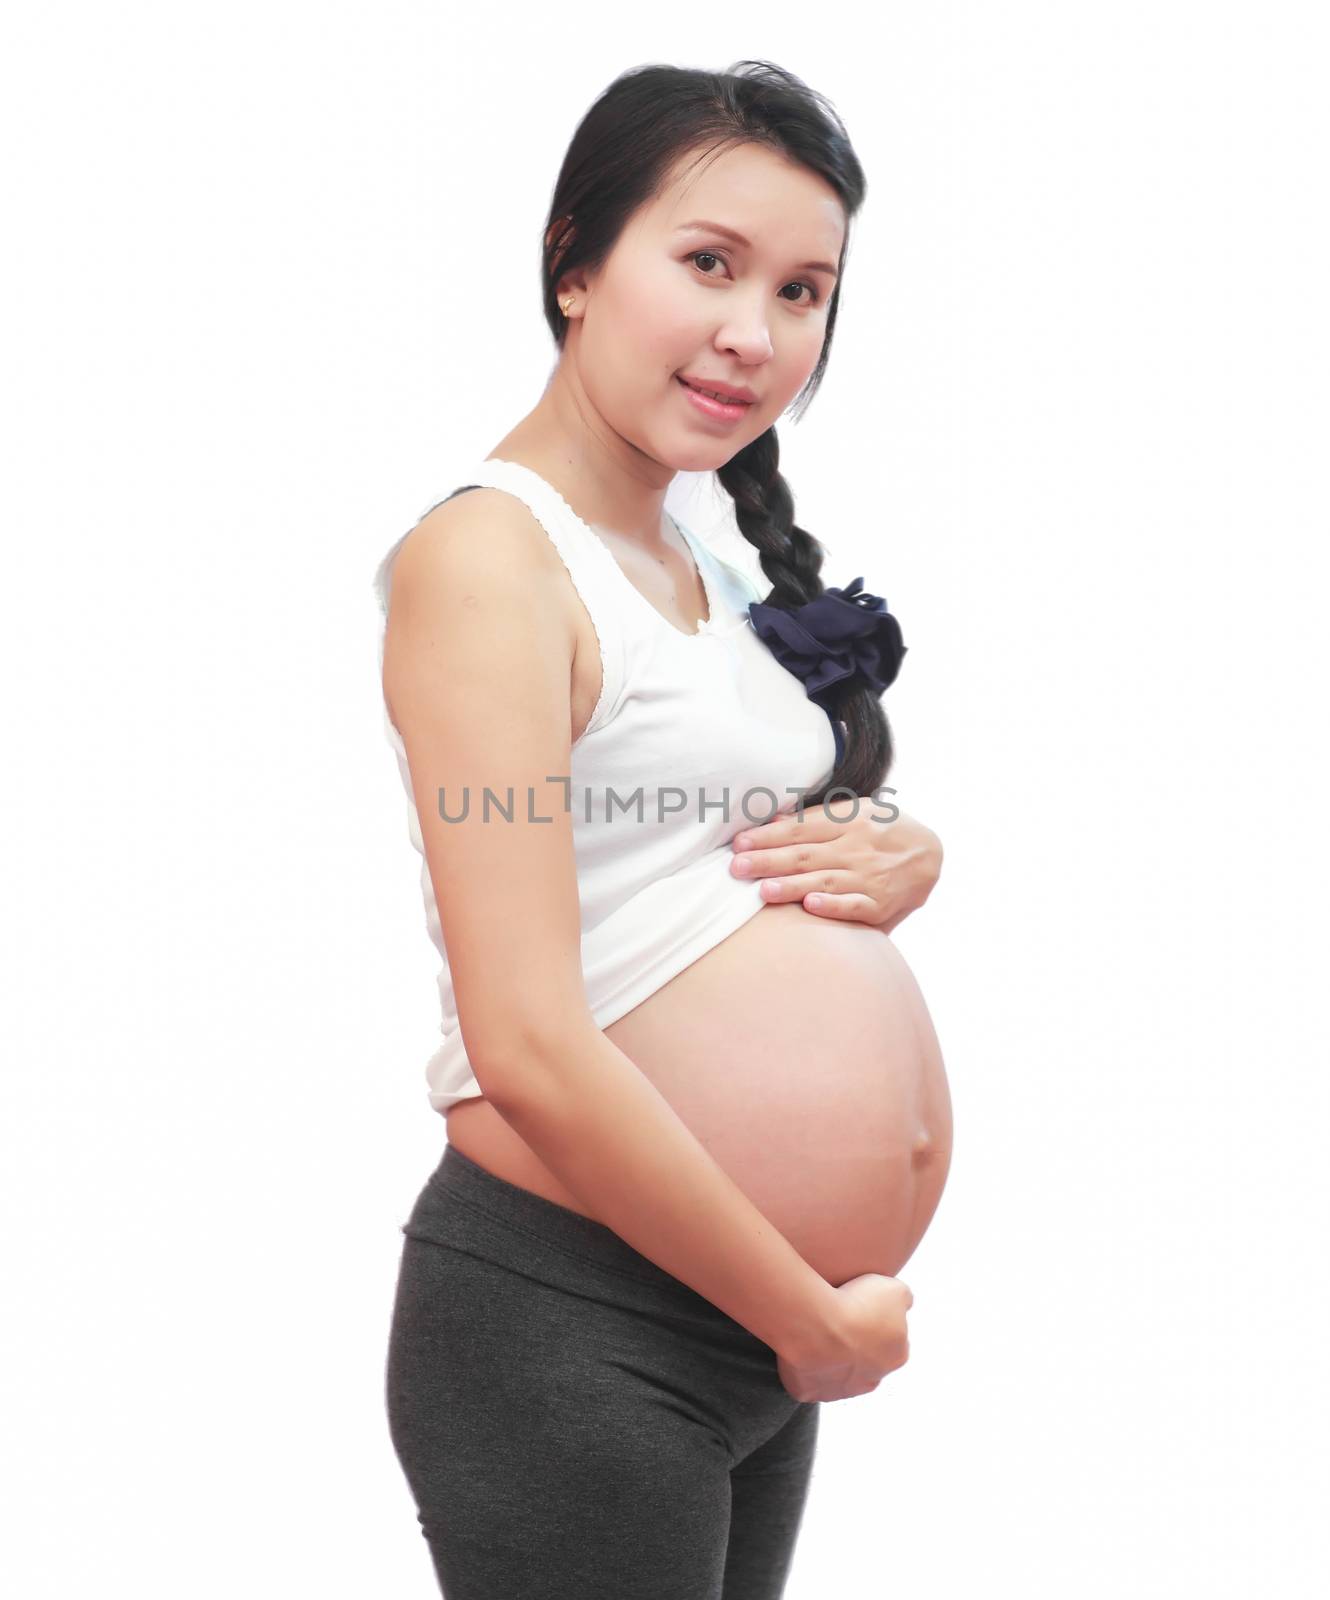 Pregnant woman by thanatip